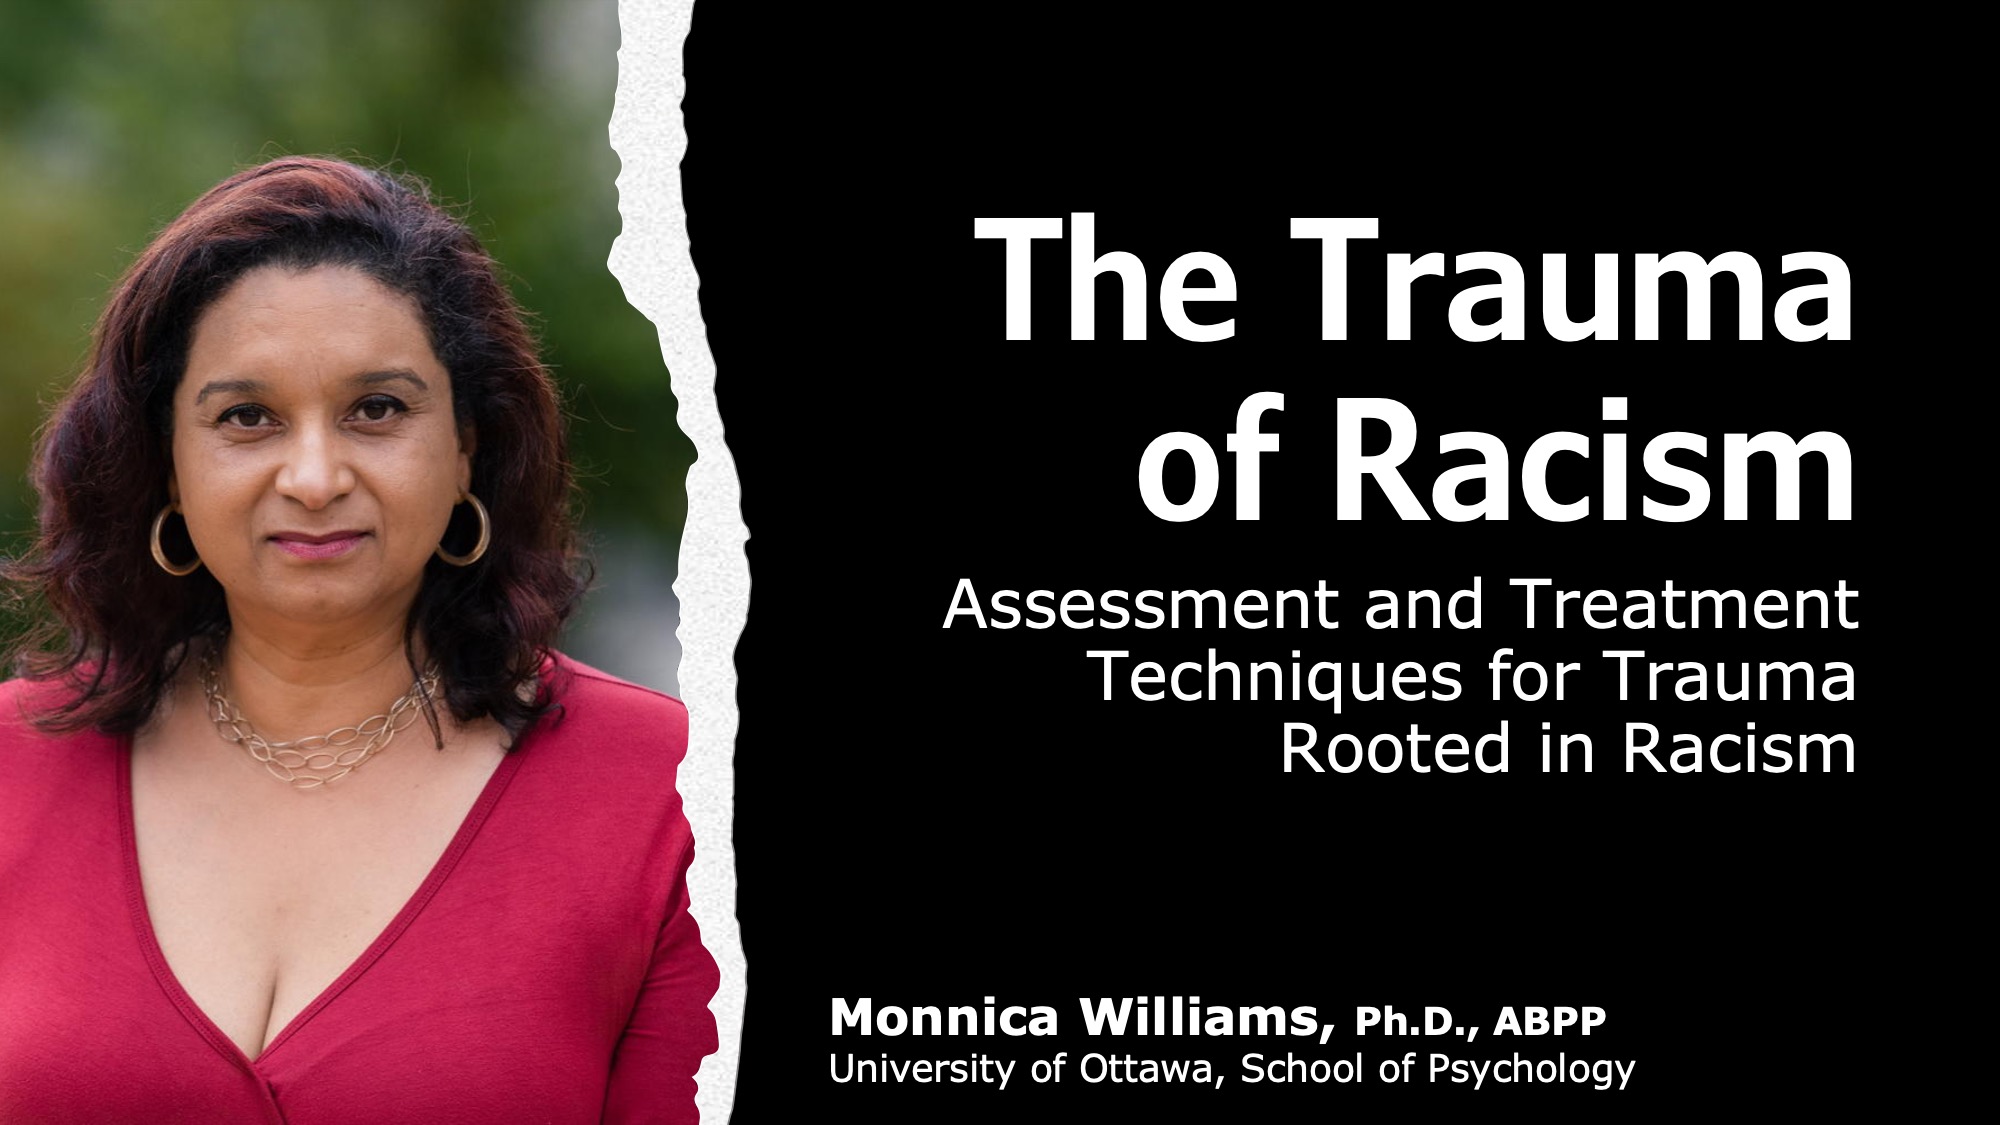 On-Demand Video Training for Racial Trauma